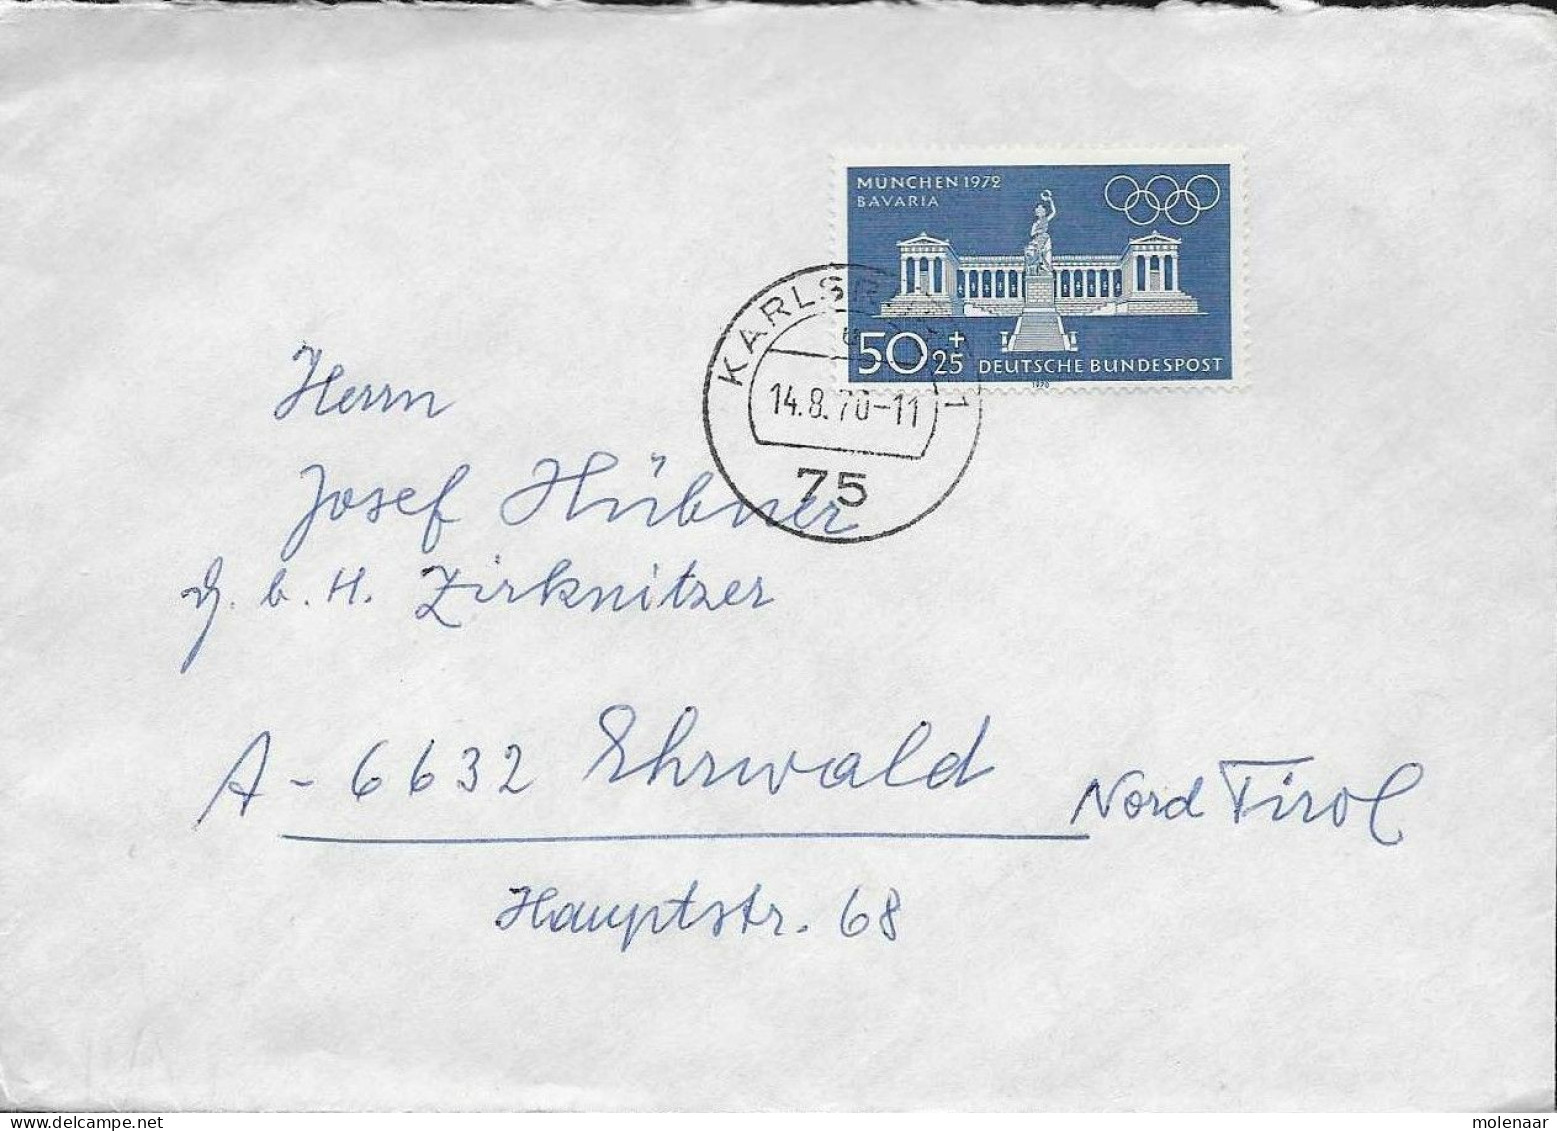 Postzegels > Europa > Duitsland > West-Duitsland > 1960-1969 > Brief Met No. 627 (17144) - Covers & Documents